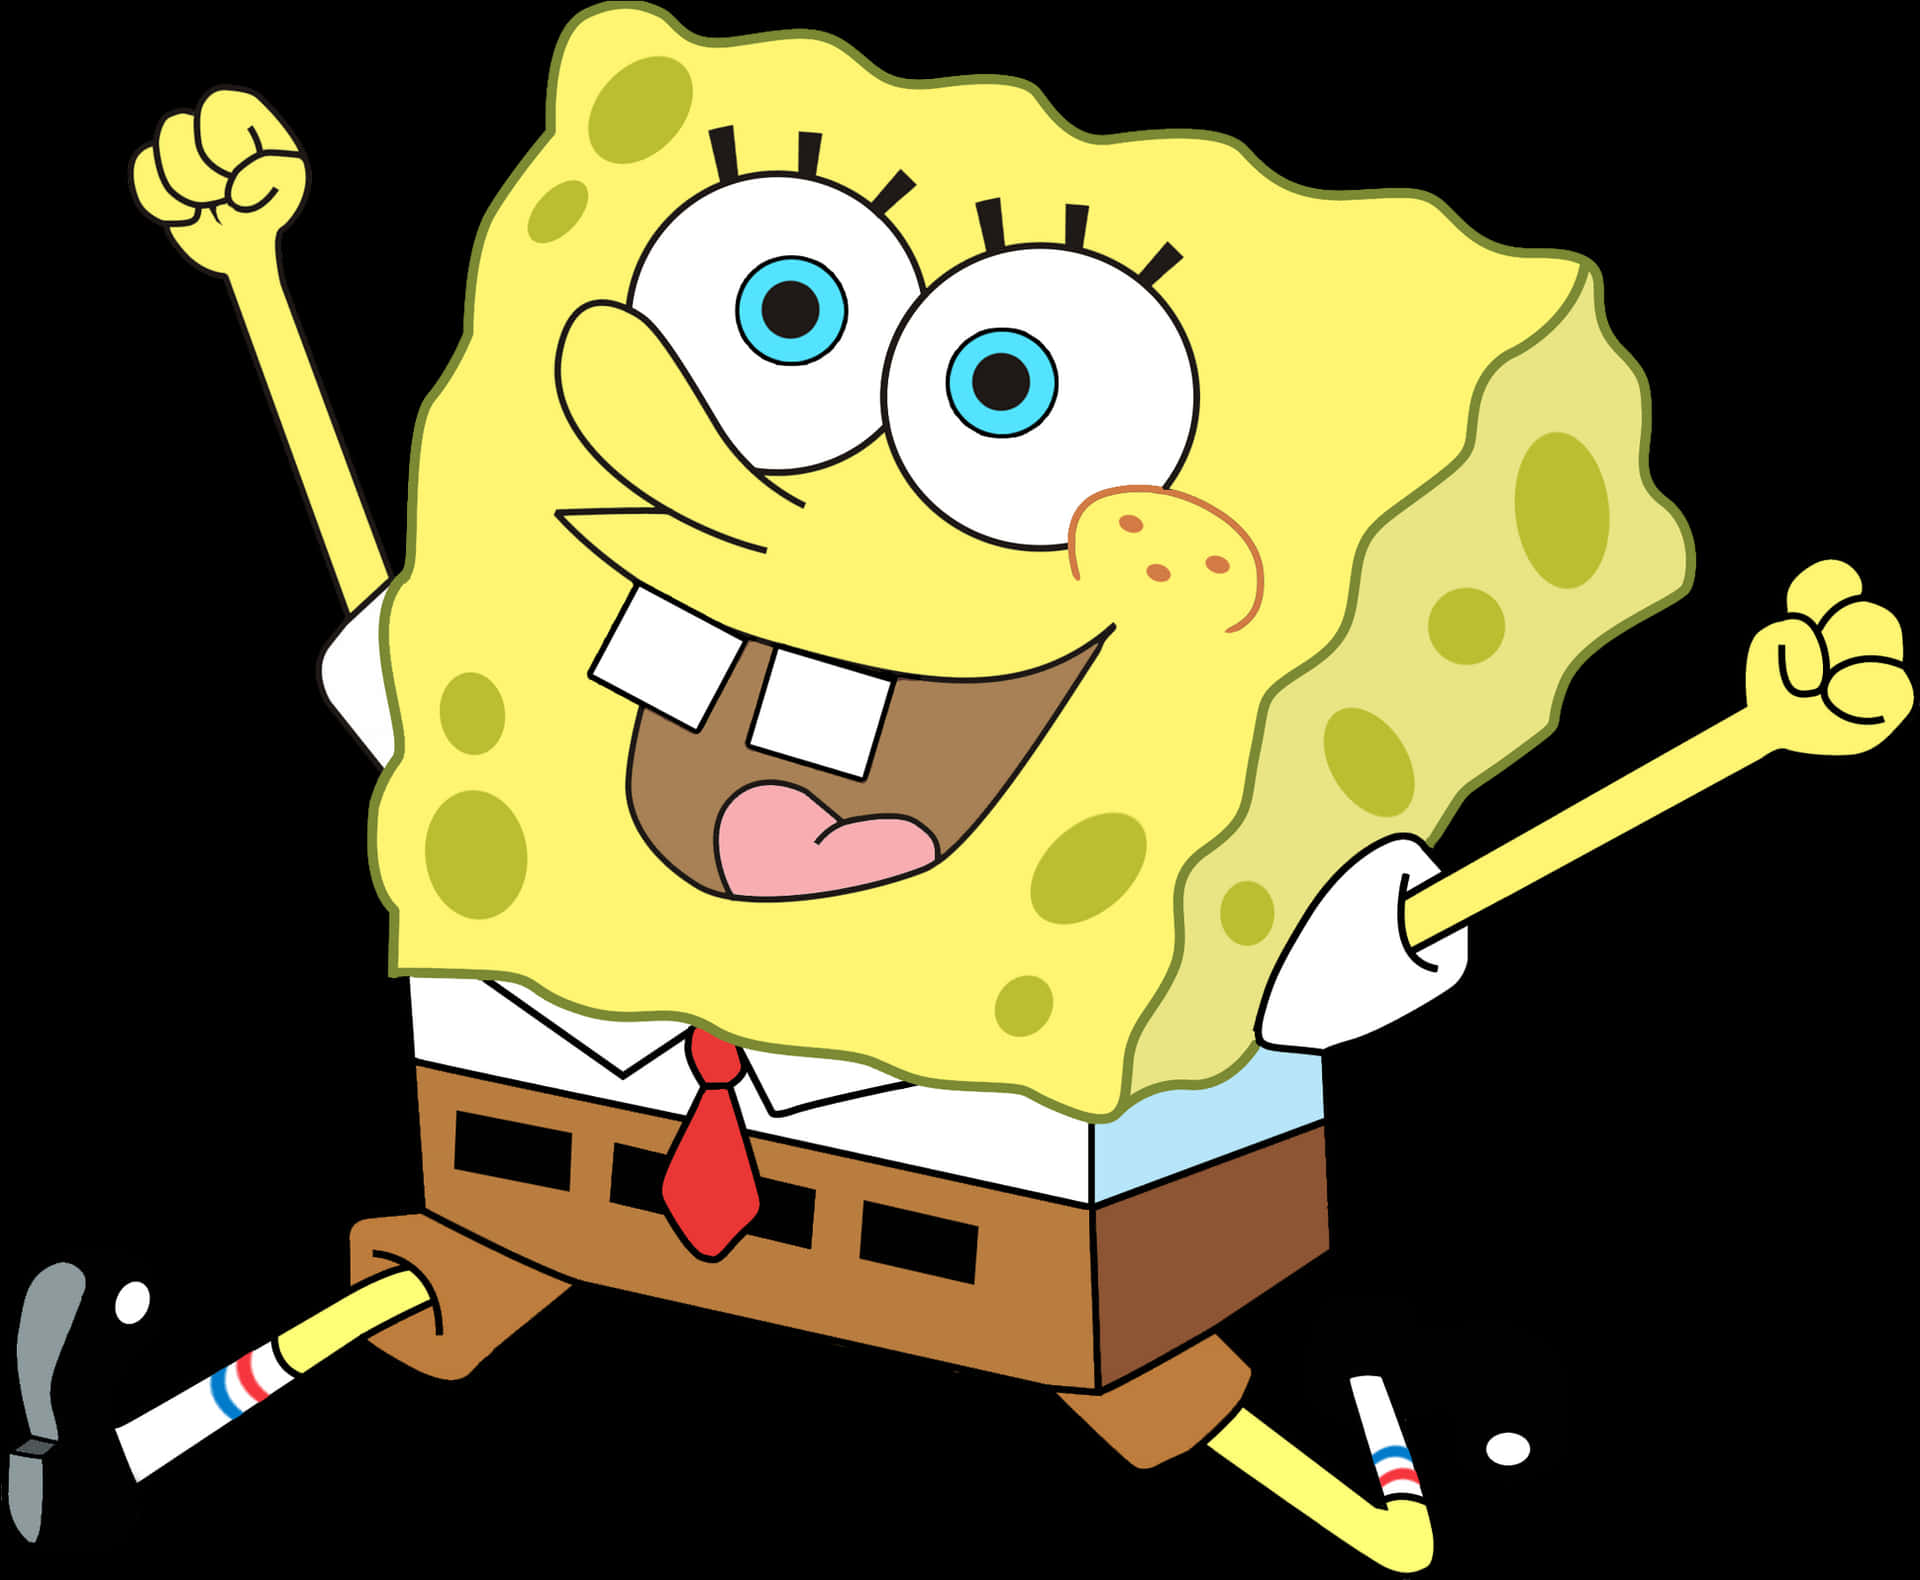 Excited Sponge Bob Square Pants PNG